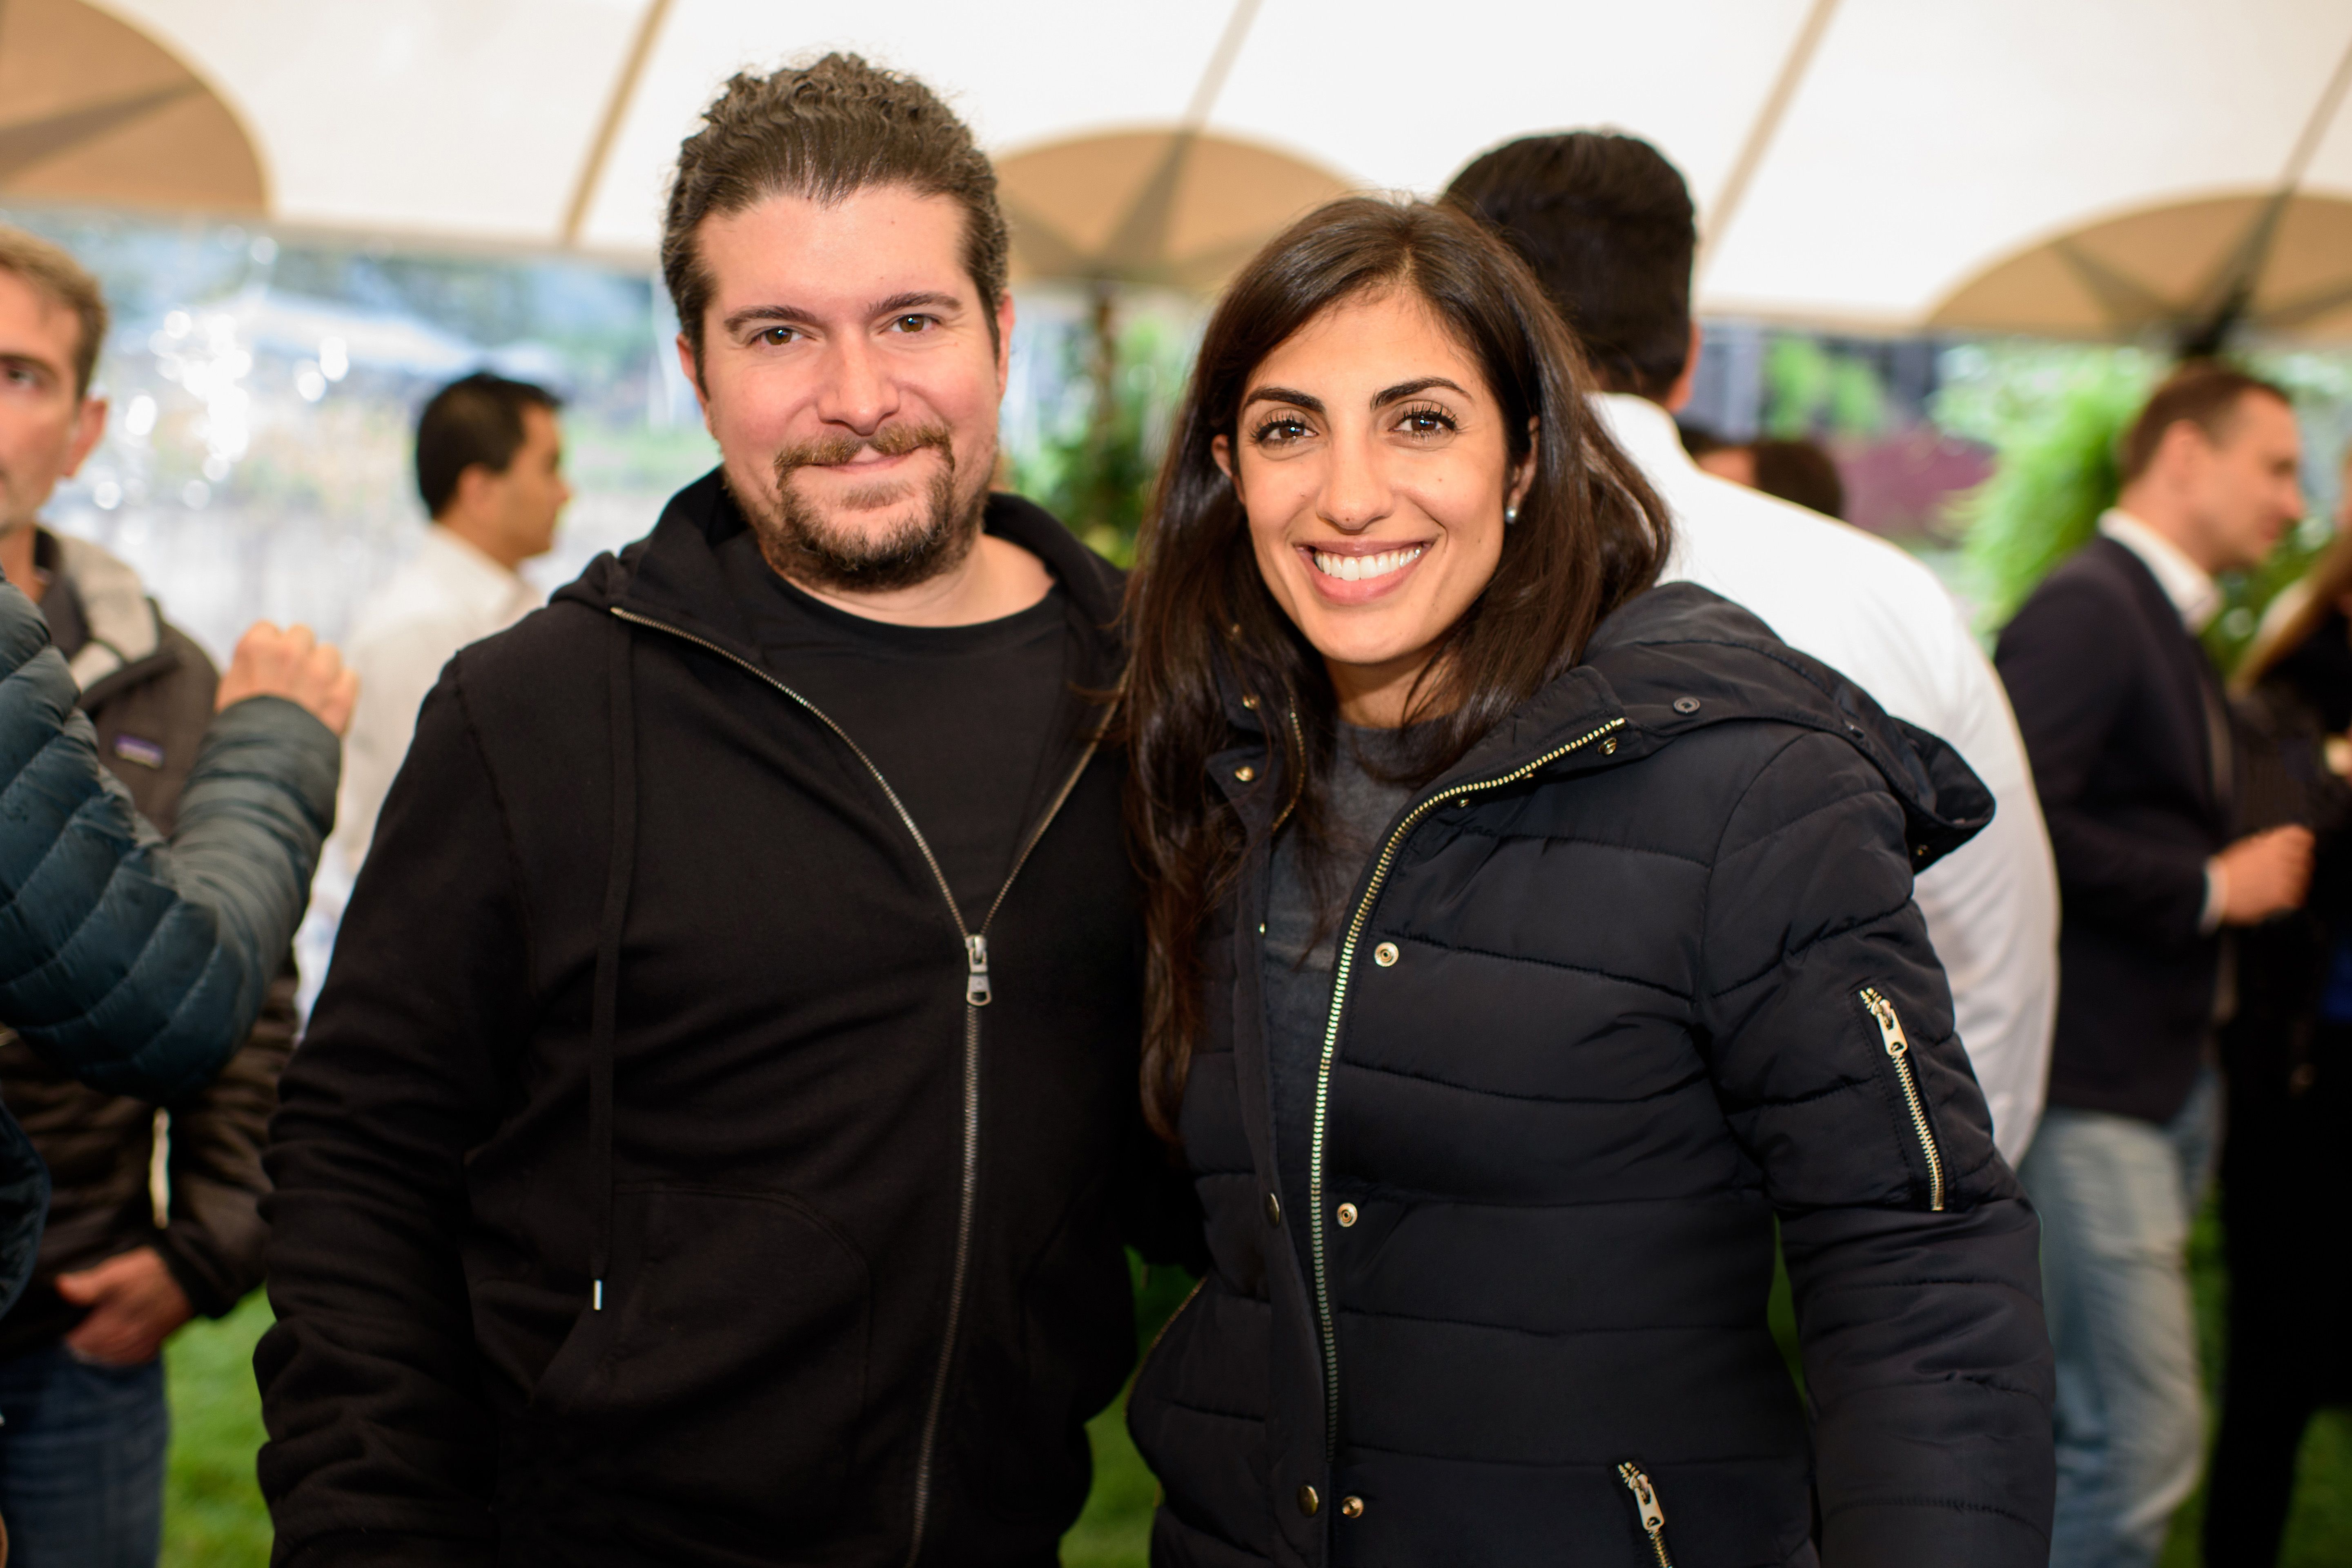 Squarespace Founder & CEO Anthony Casalena (left) with Index Partner Nina Achadjian (right).